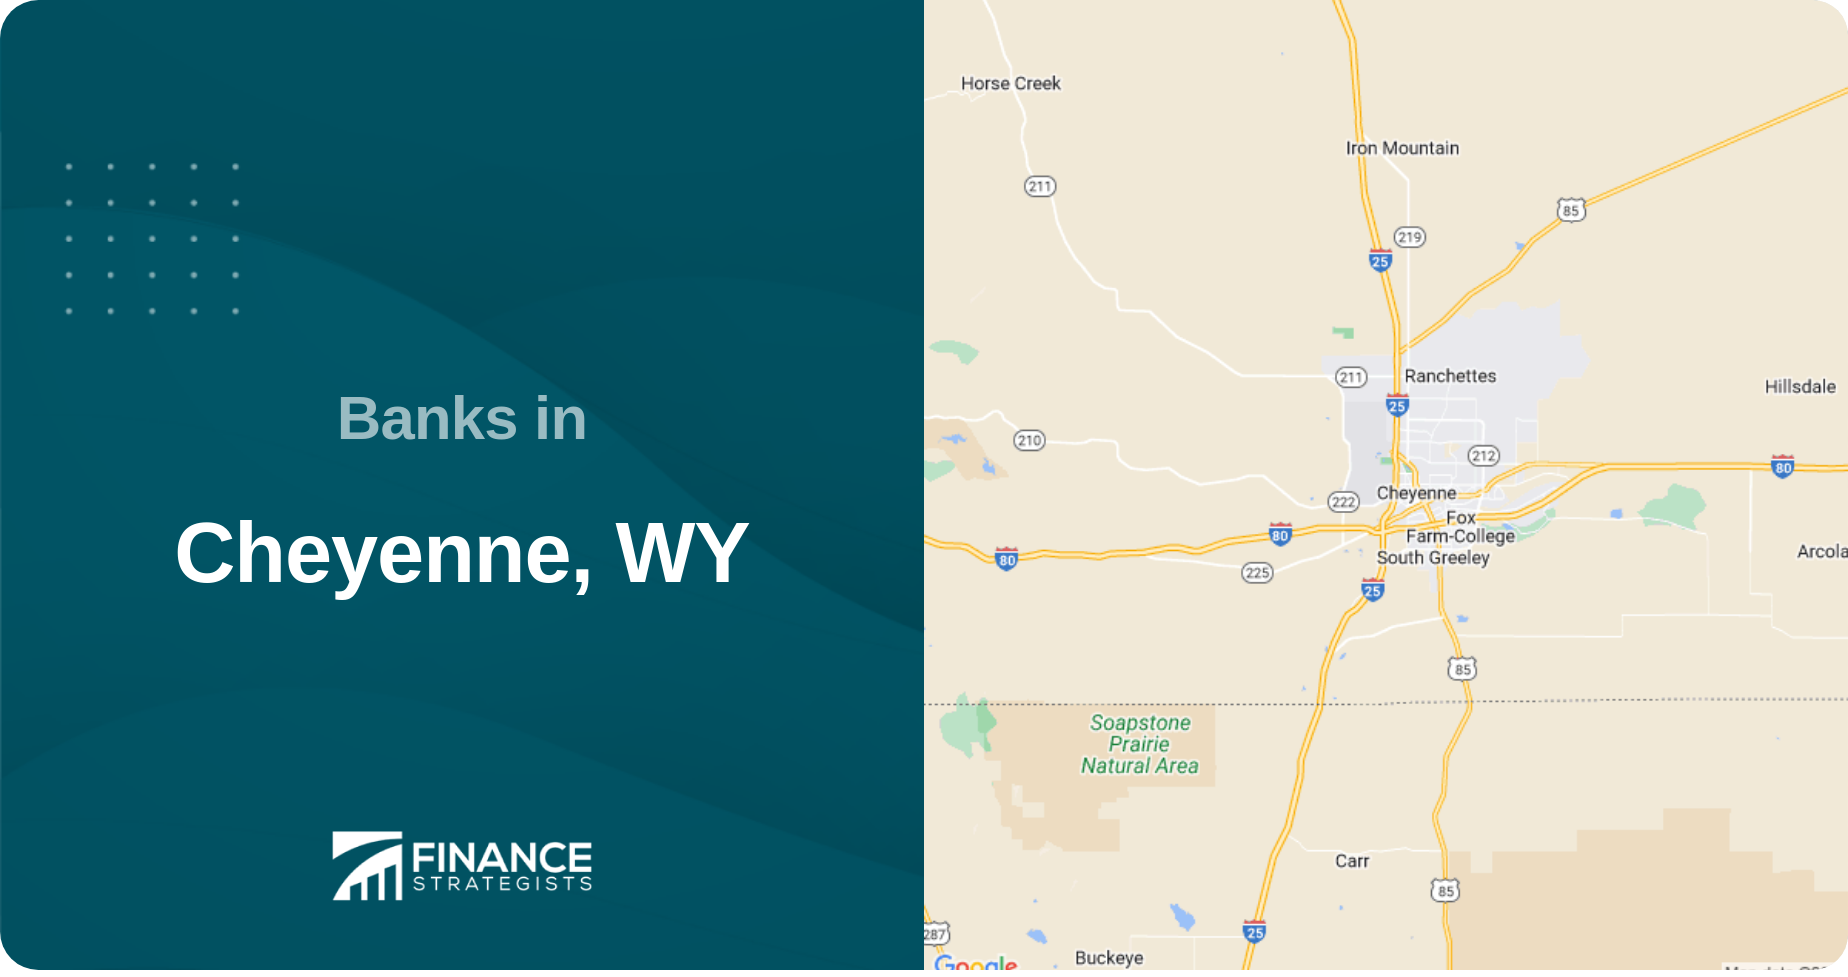 Banks in Cheyenne, WY